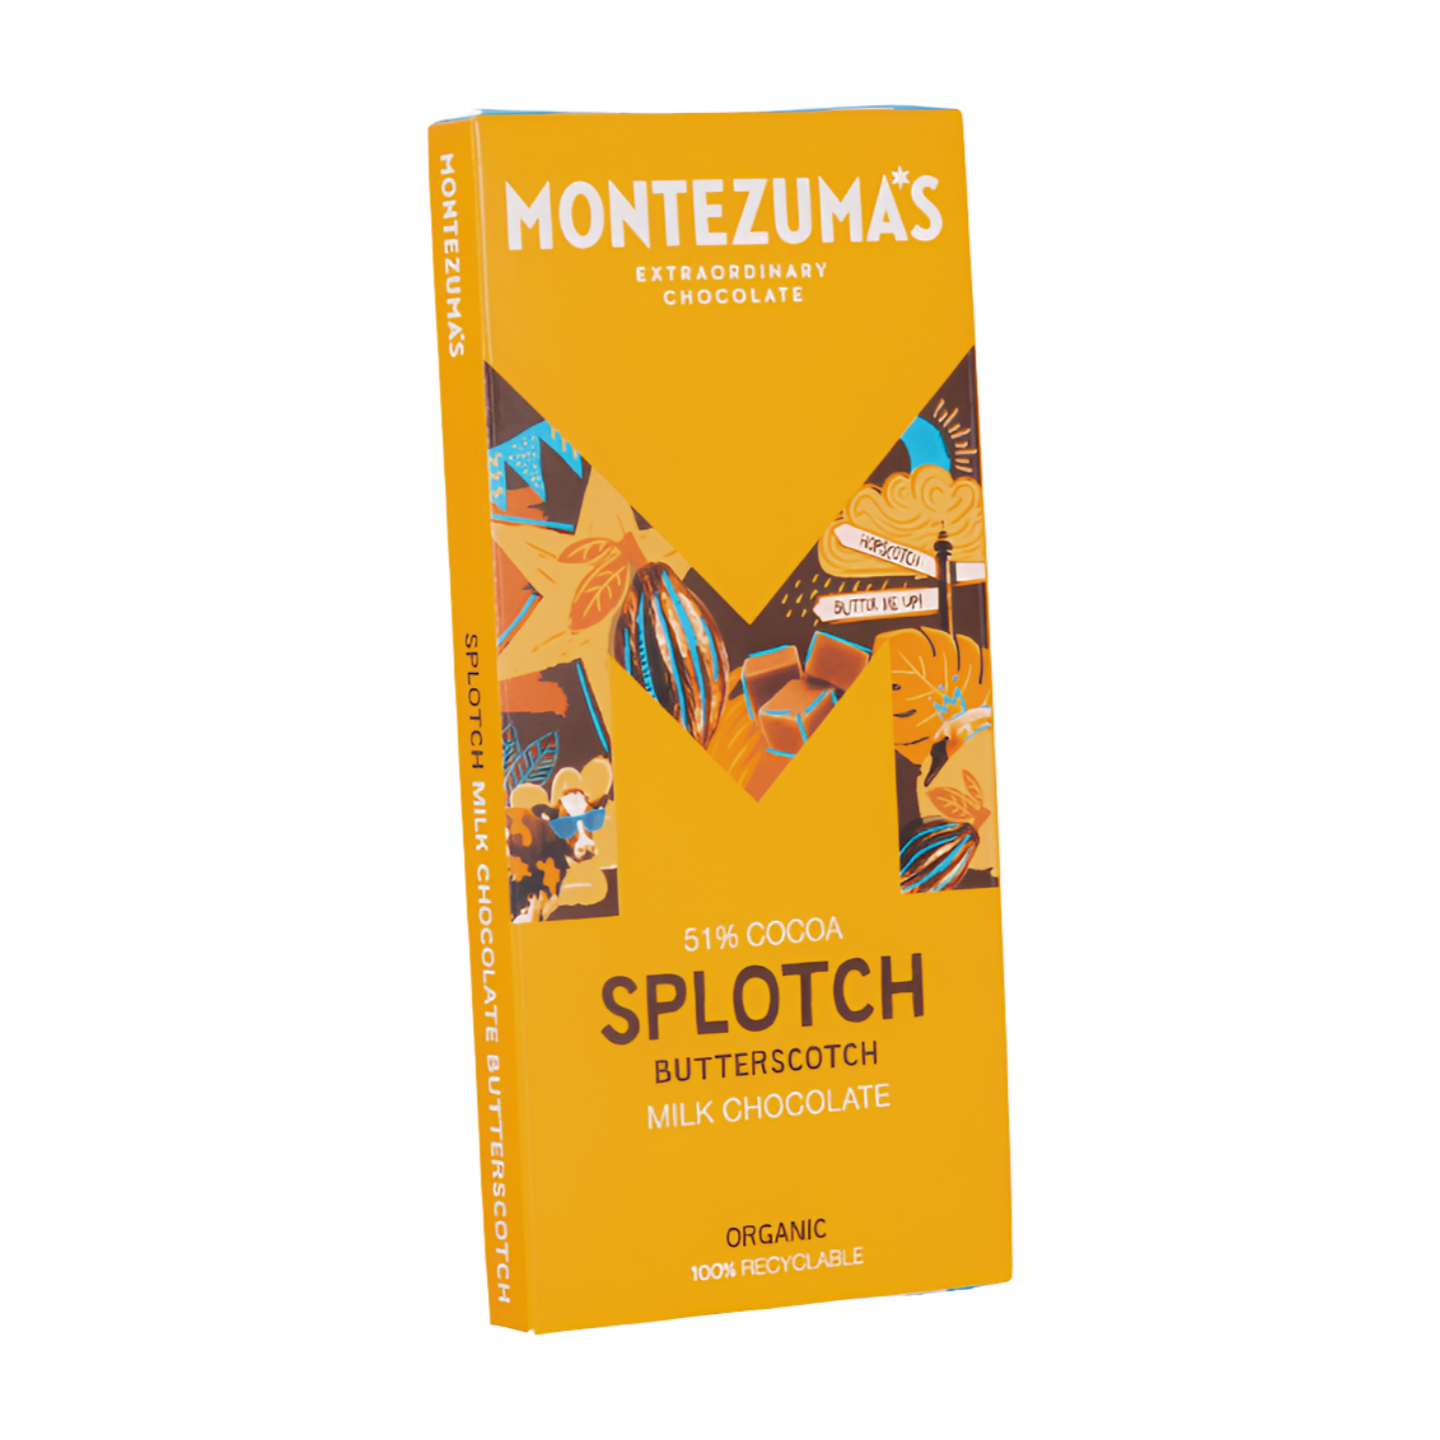 Montezuma's Splotch 51% Milk Chocolate with Butterscotch (12x90g)